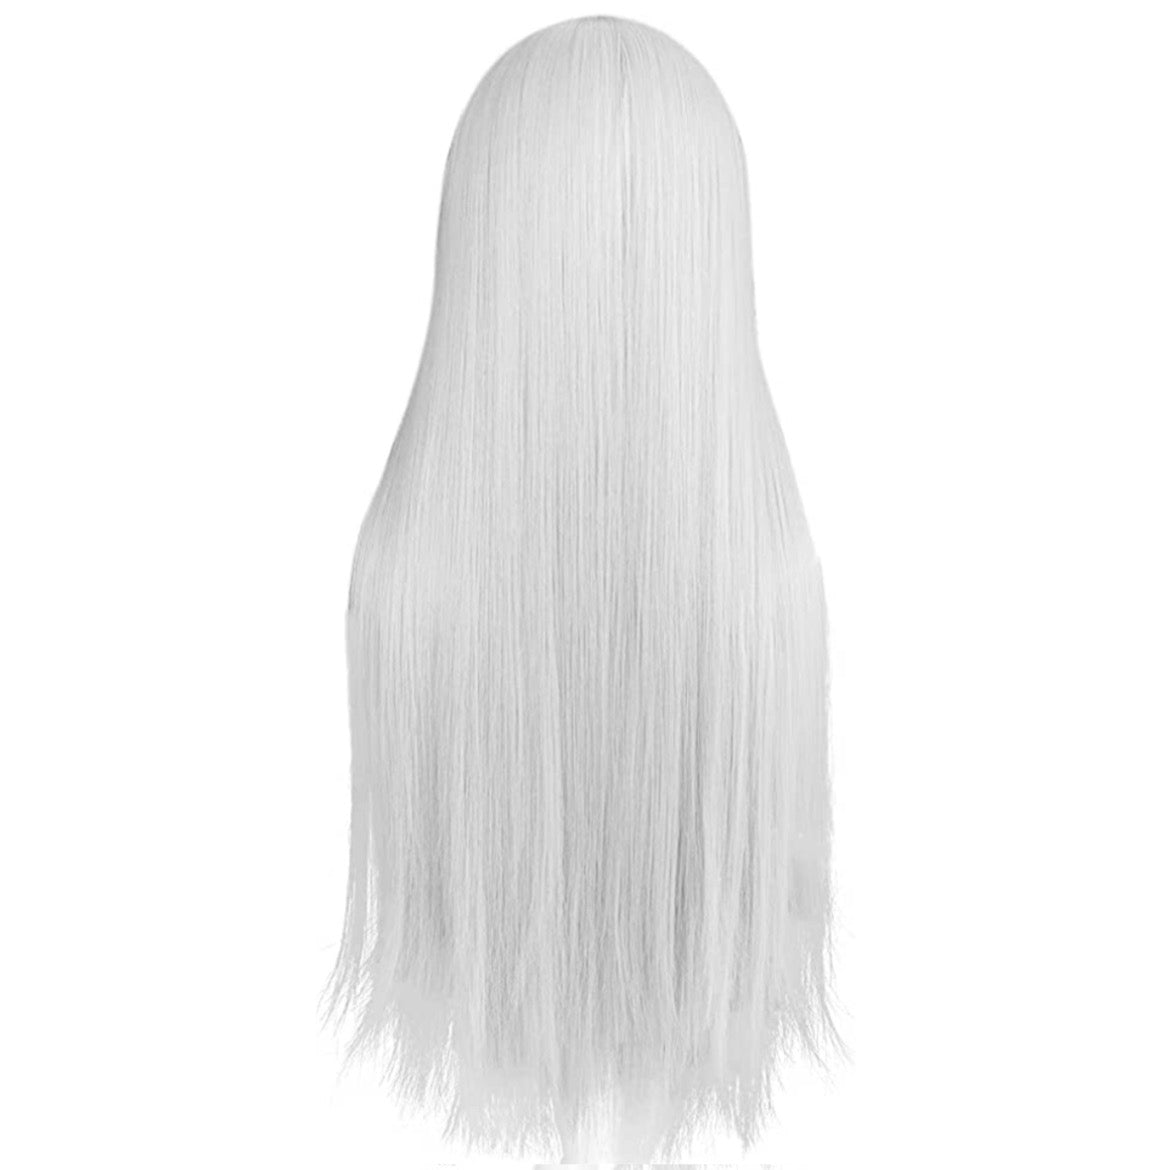 Long White Wig